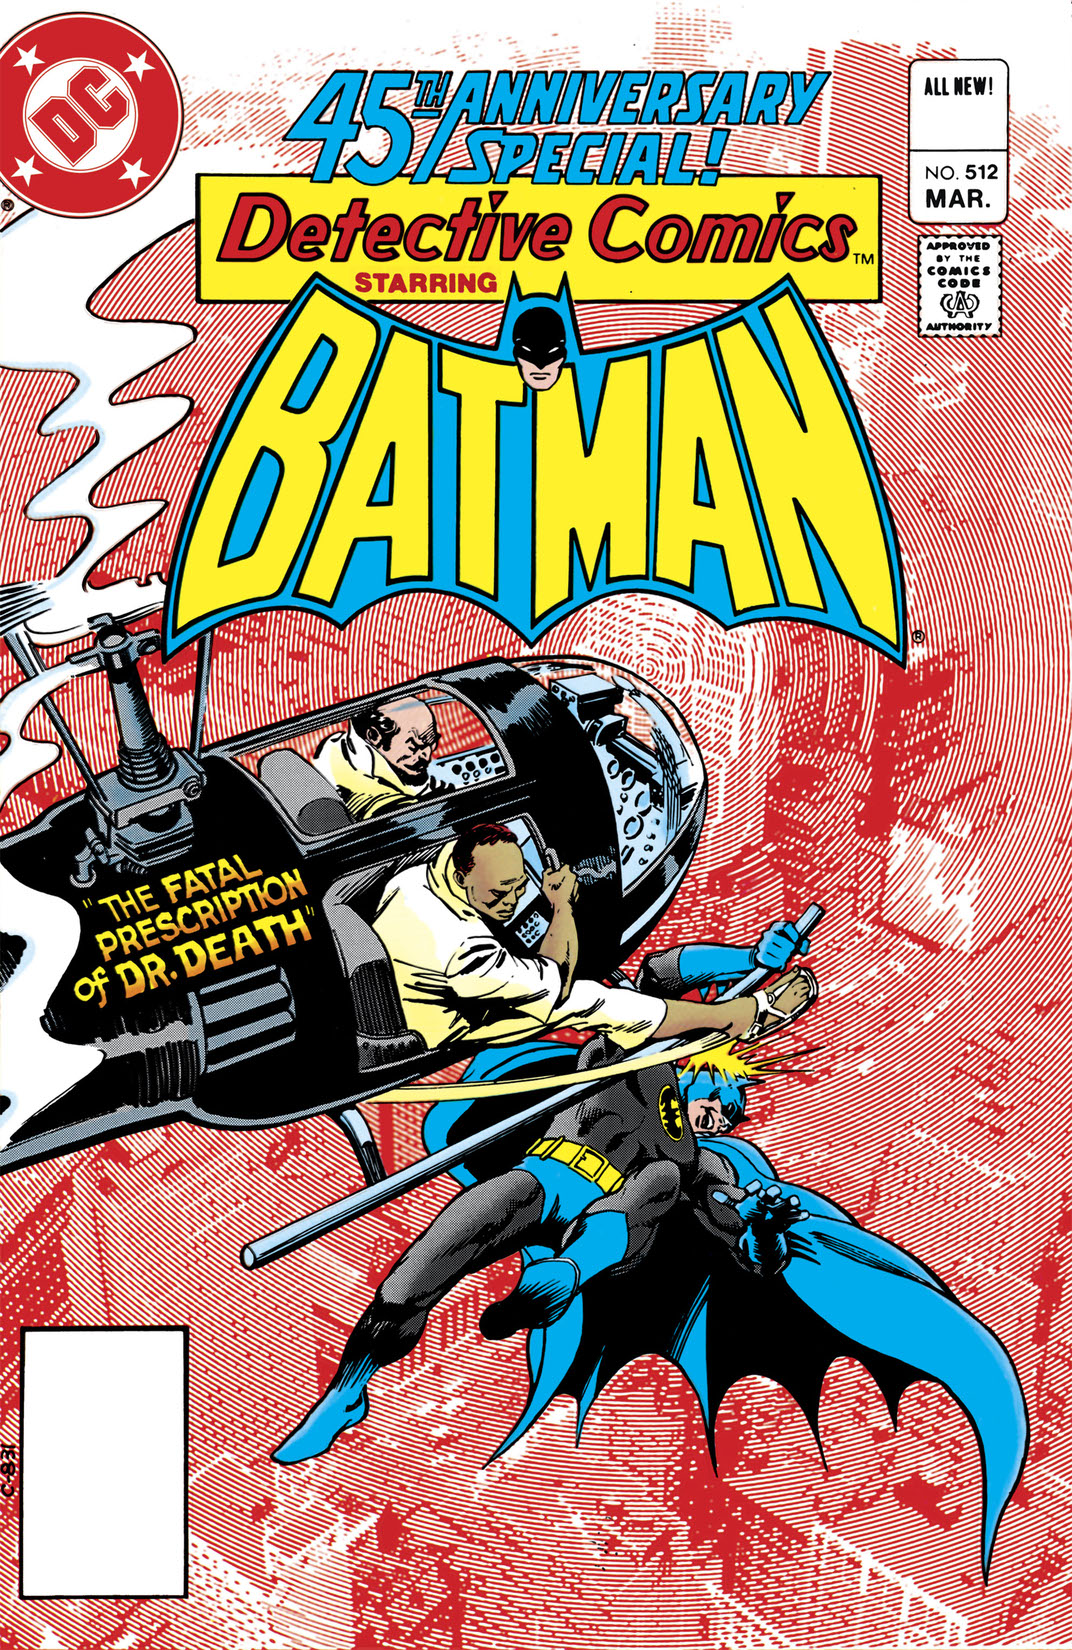 Detective Comics (1937-) #512 preview images